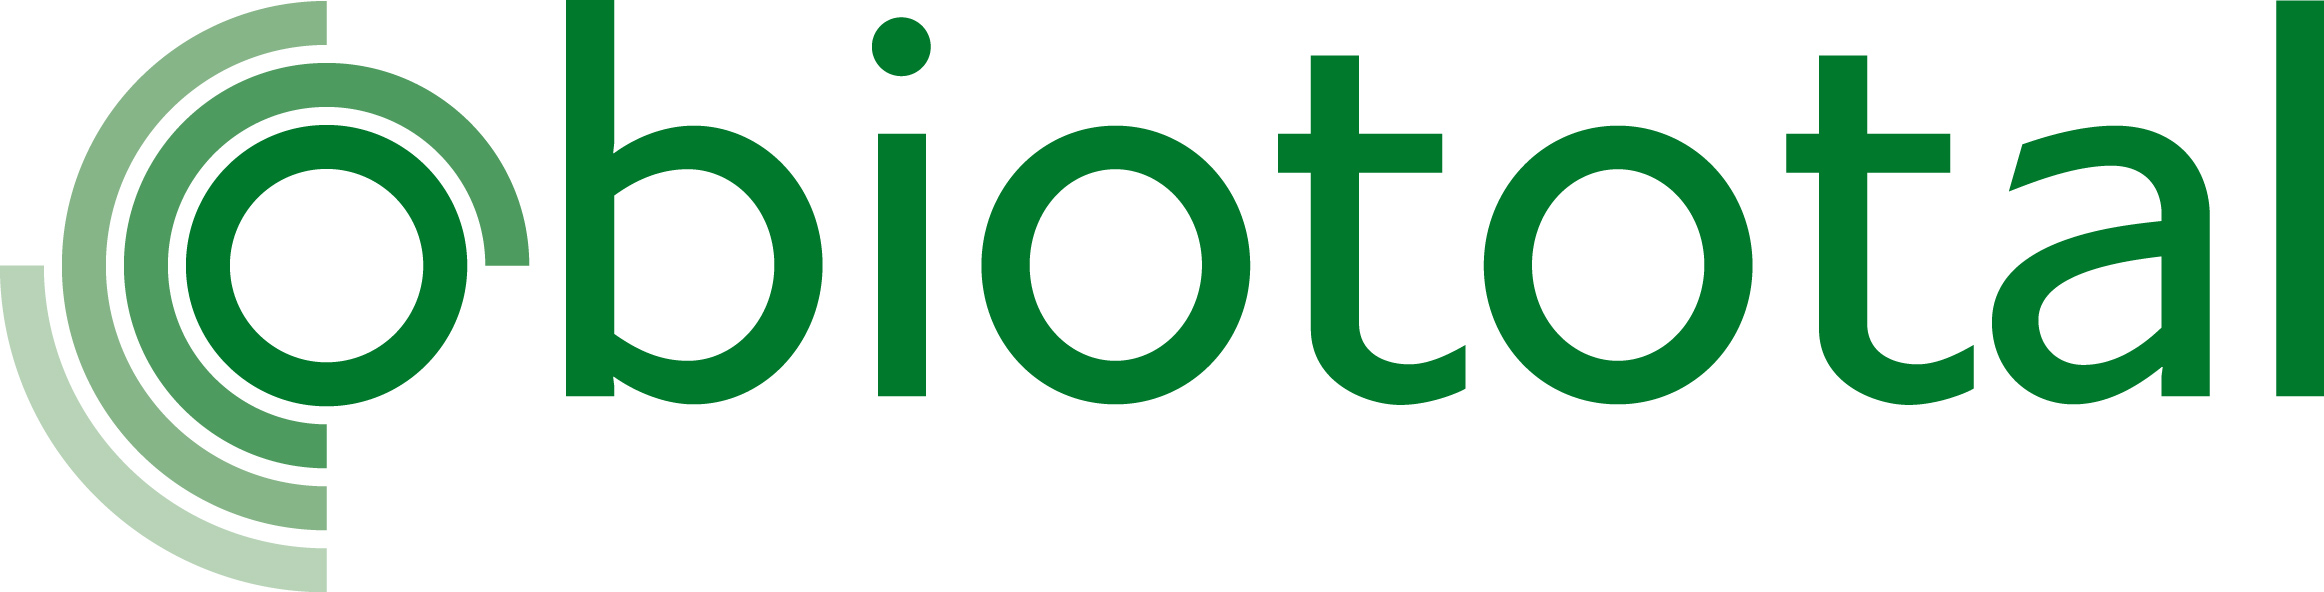 Biototal logotyp